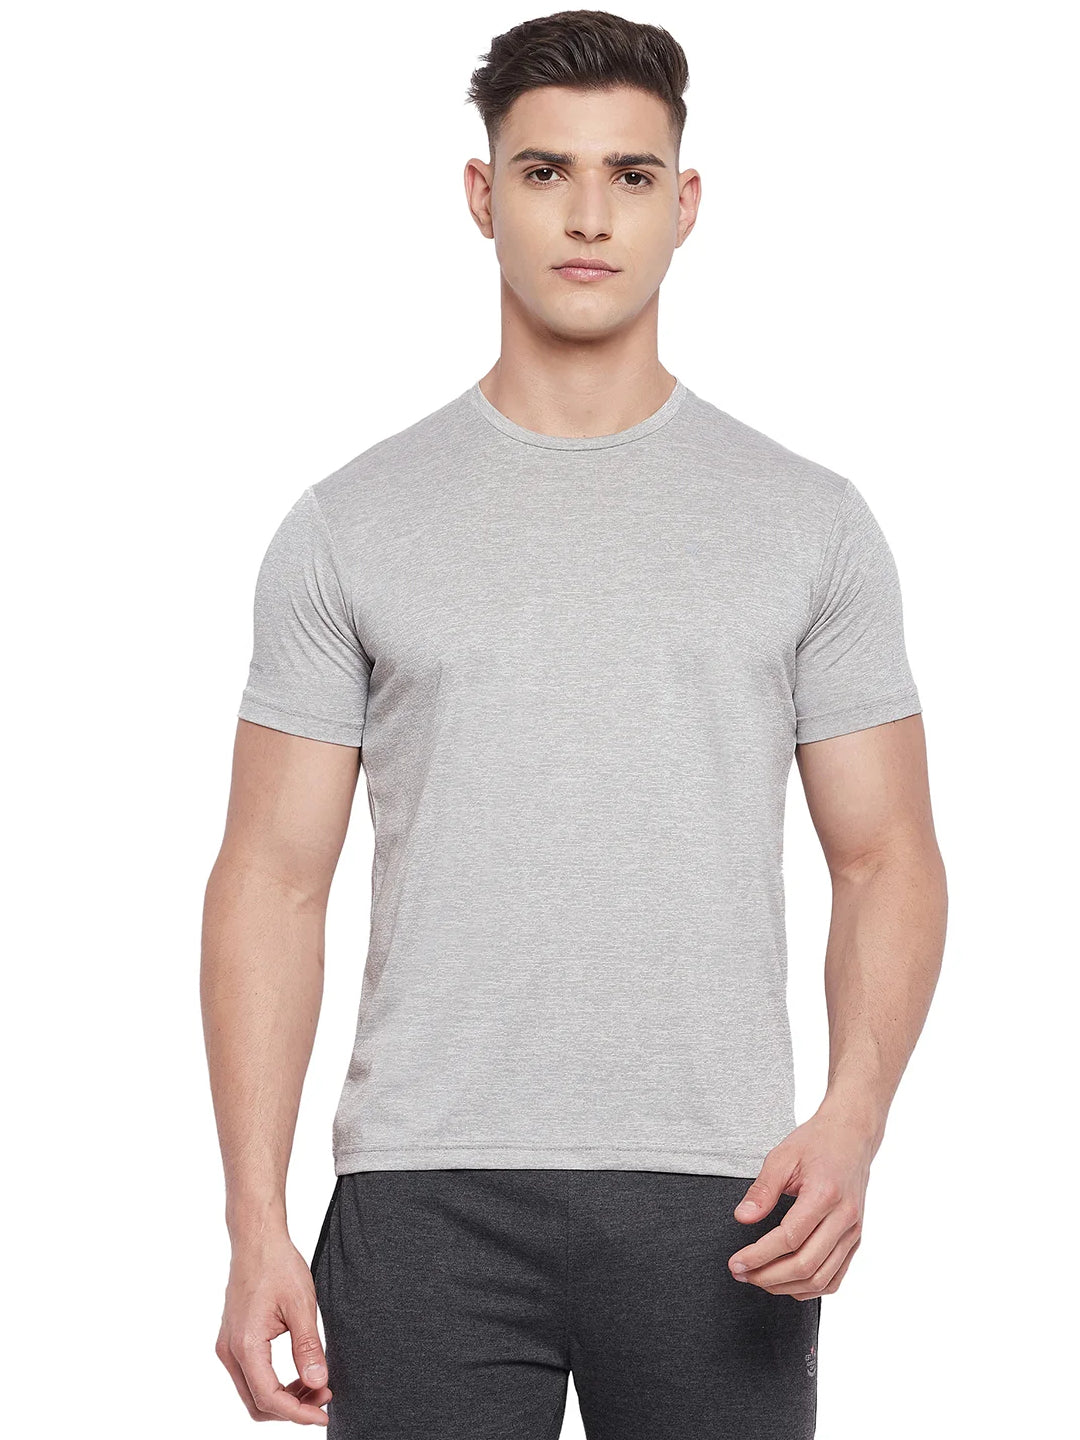 Neva Men Round Neck Half Sleeve Sports wear T-shirt- Lt. Grey